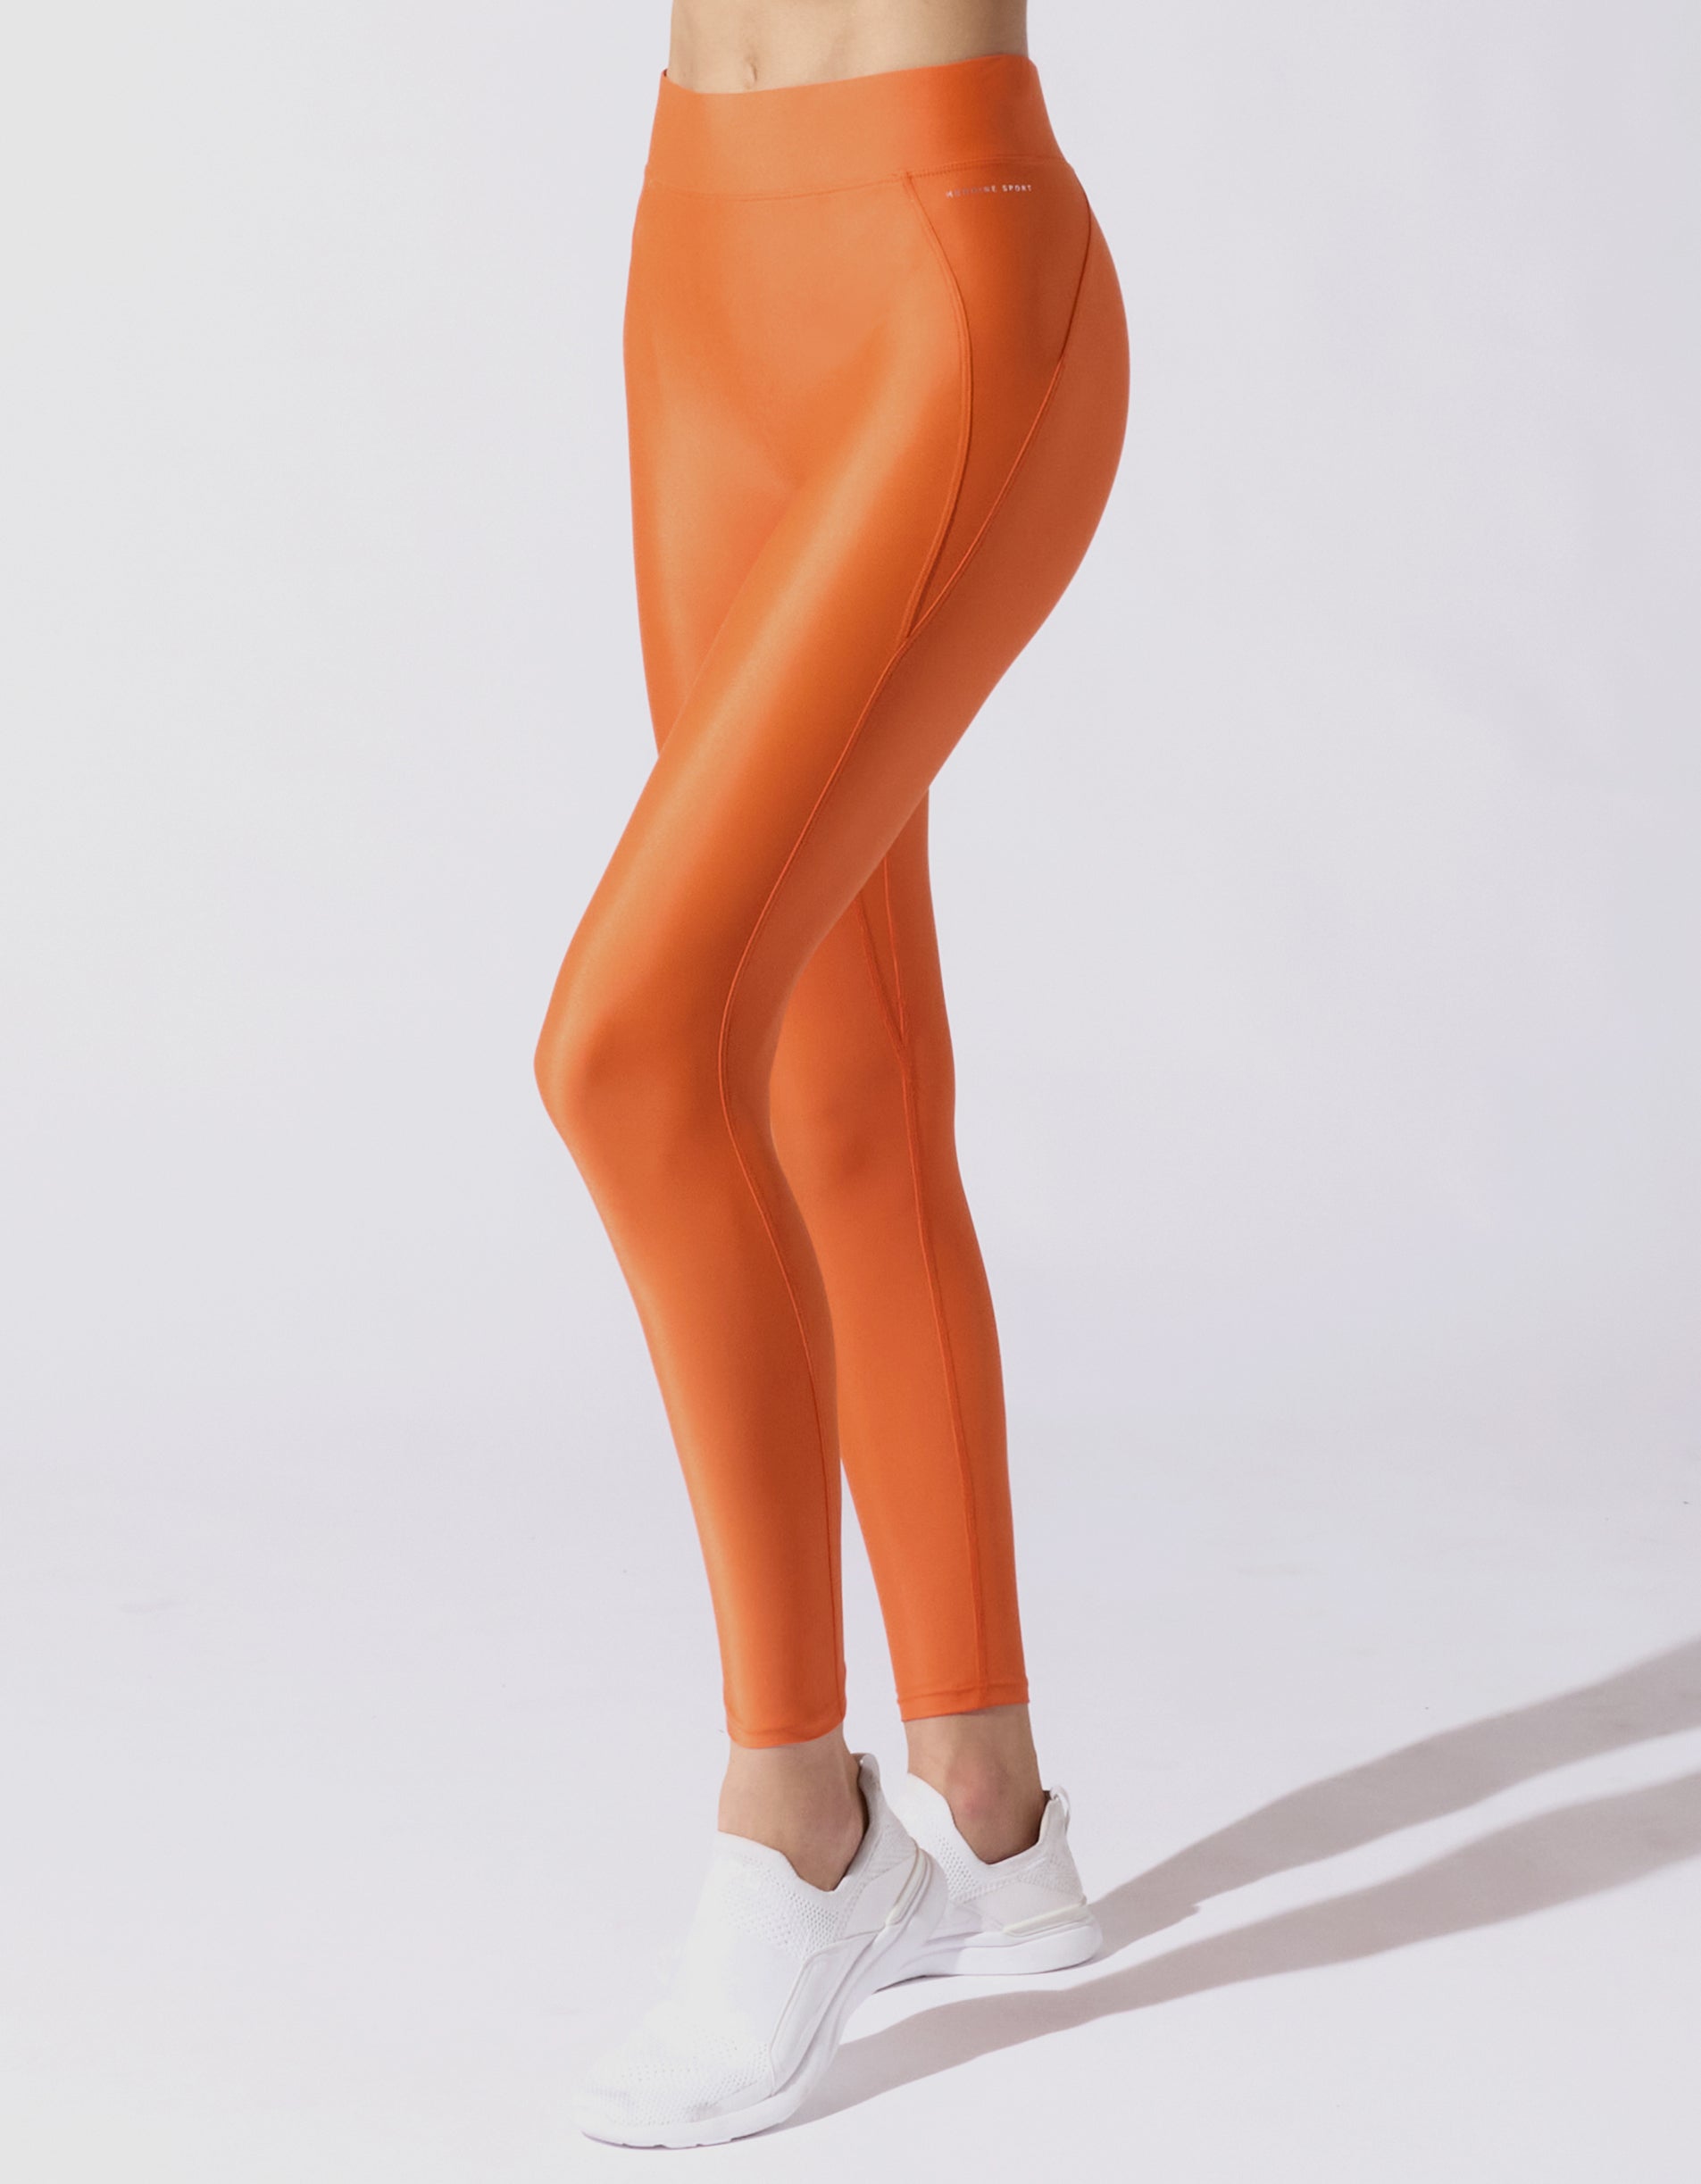 Tangerine Women's Leggings On Sale Up To 90% Off Retail